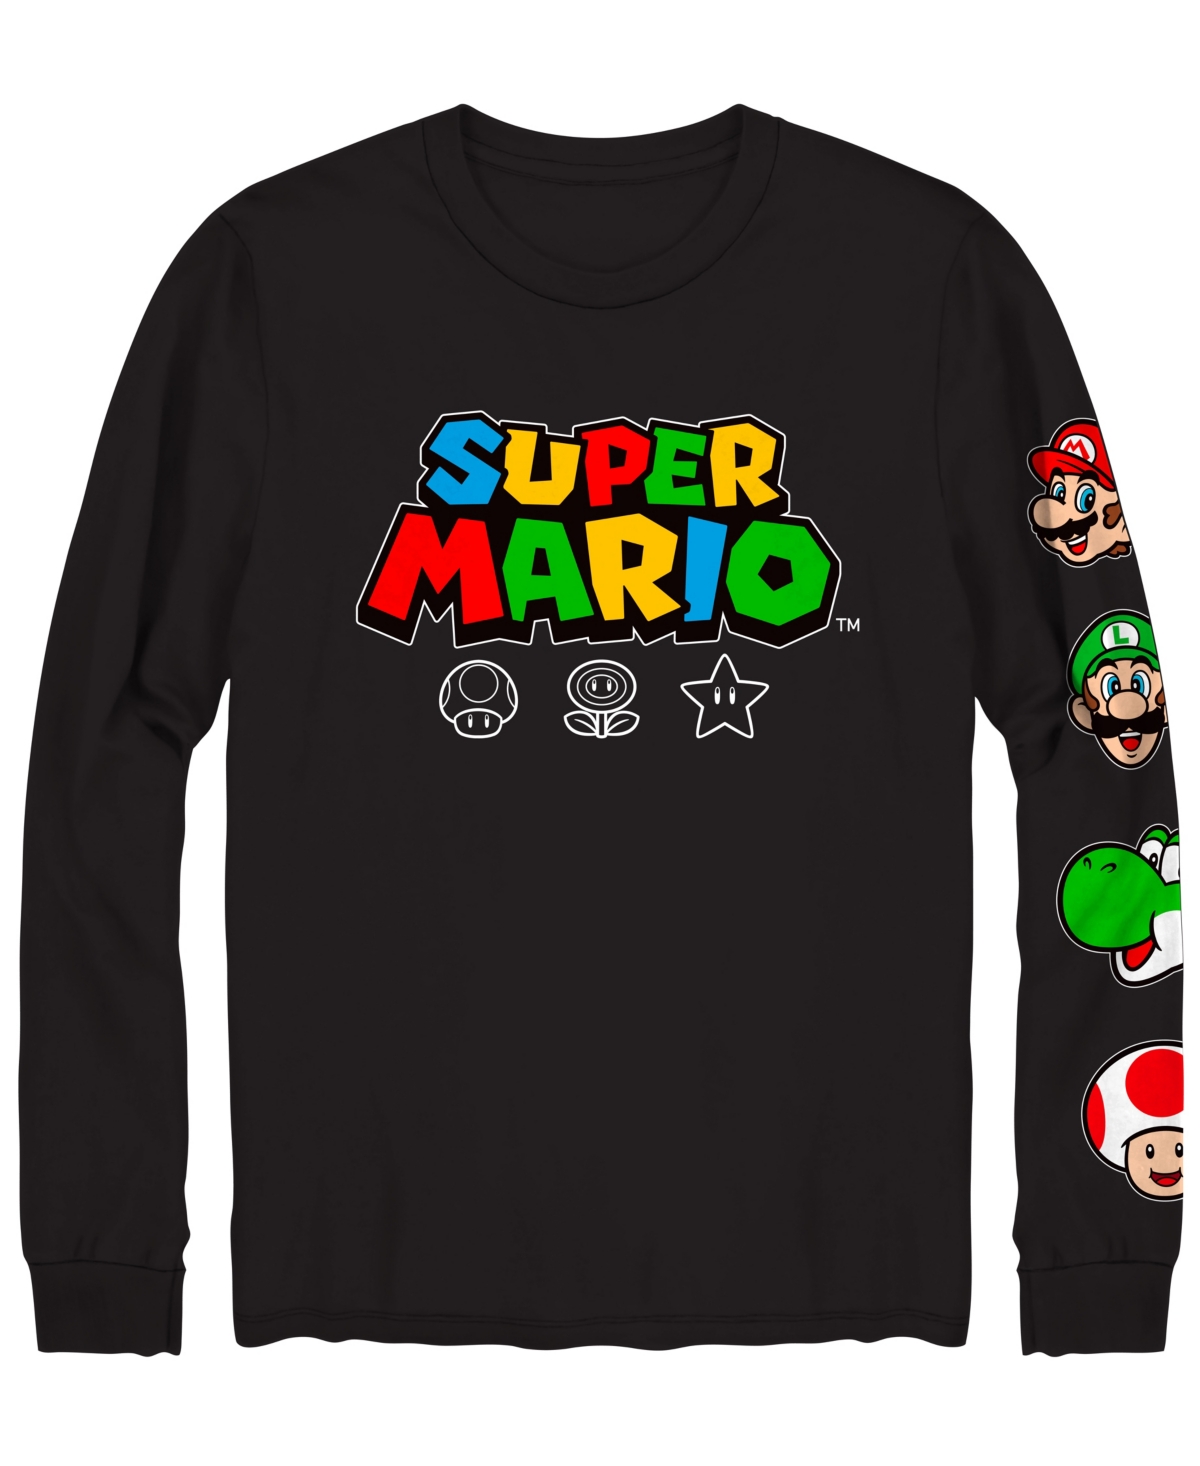 Men's Super Mario Long Sleeve T-shirt - Black